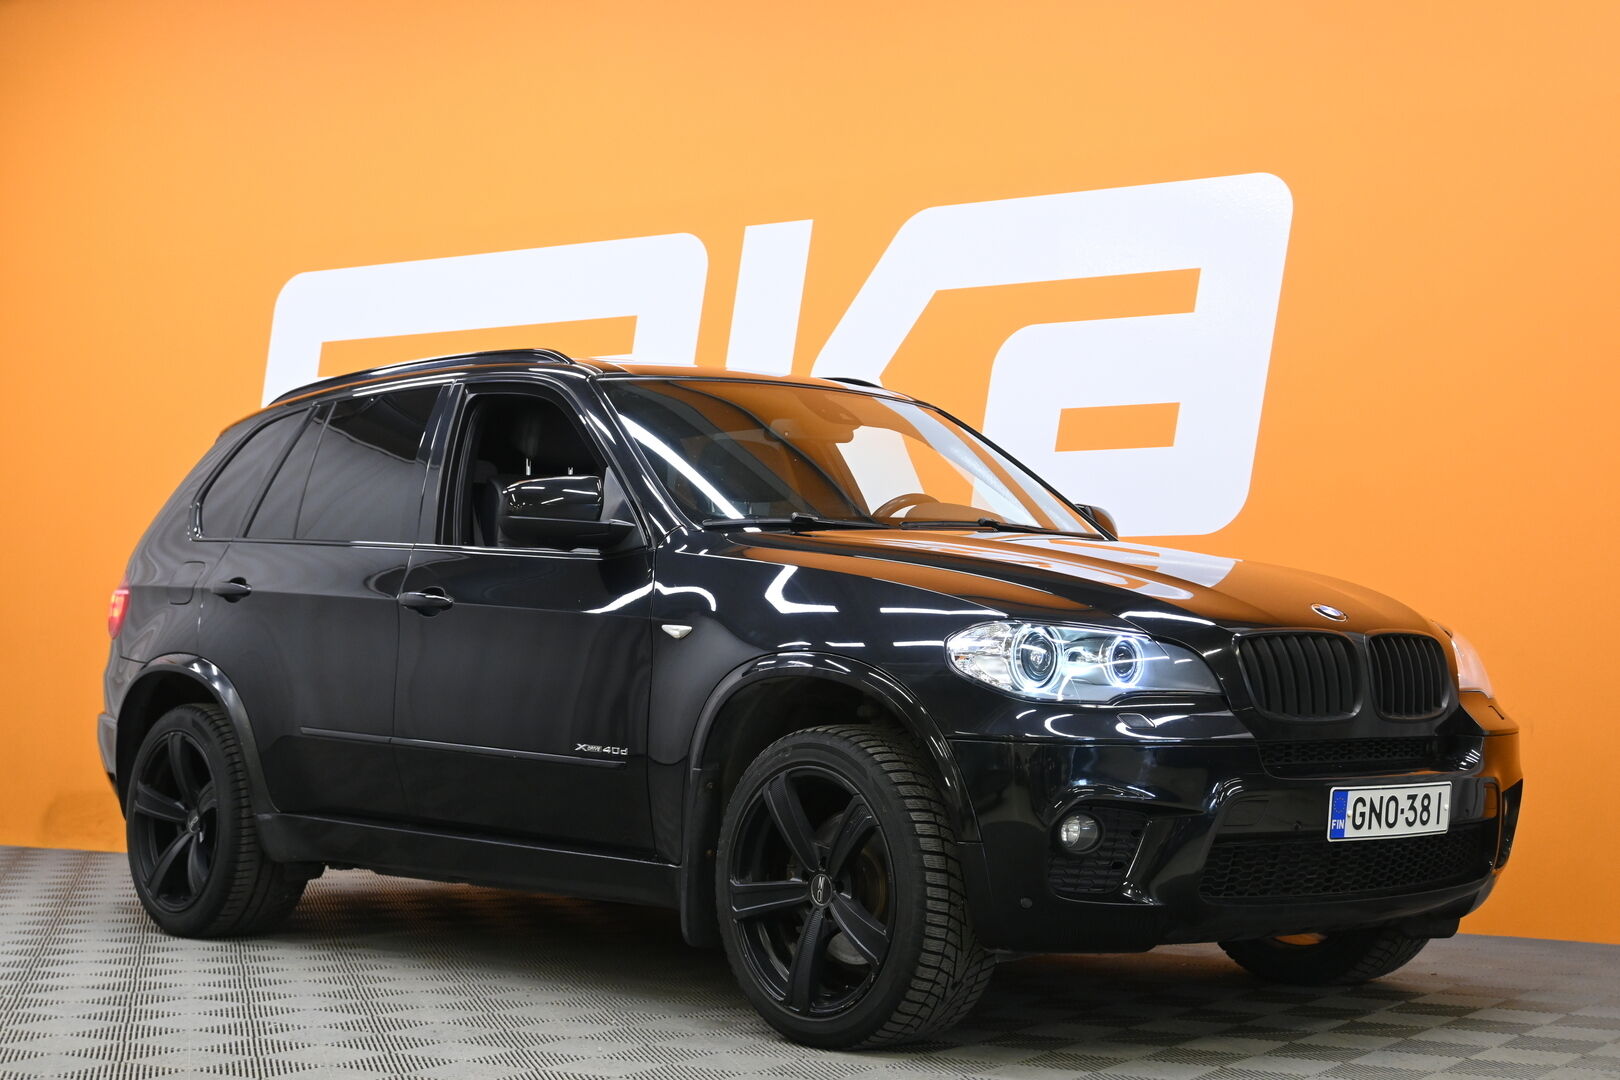 Musta Maastoauto, BMW X5 – GNO-381